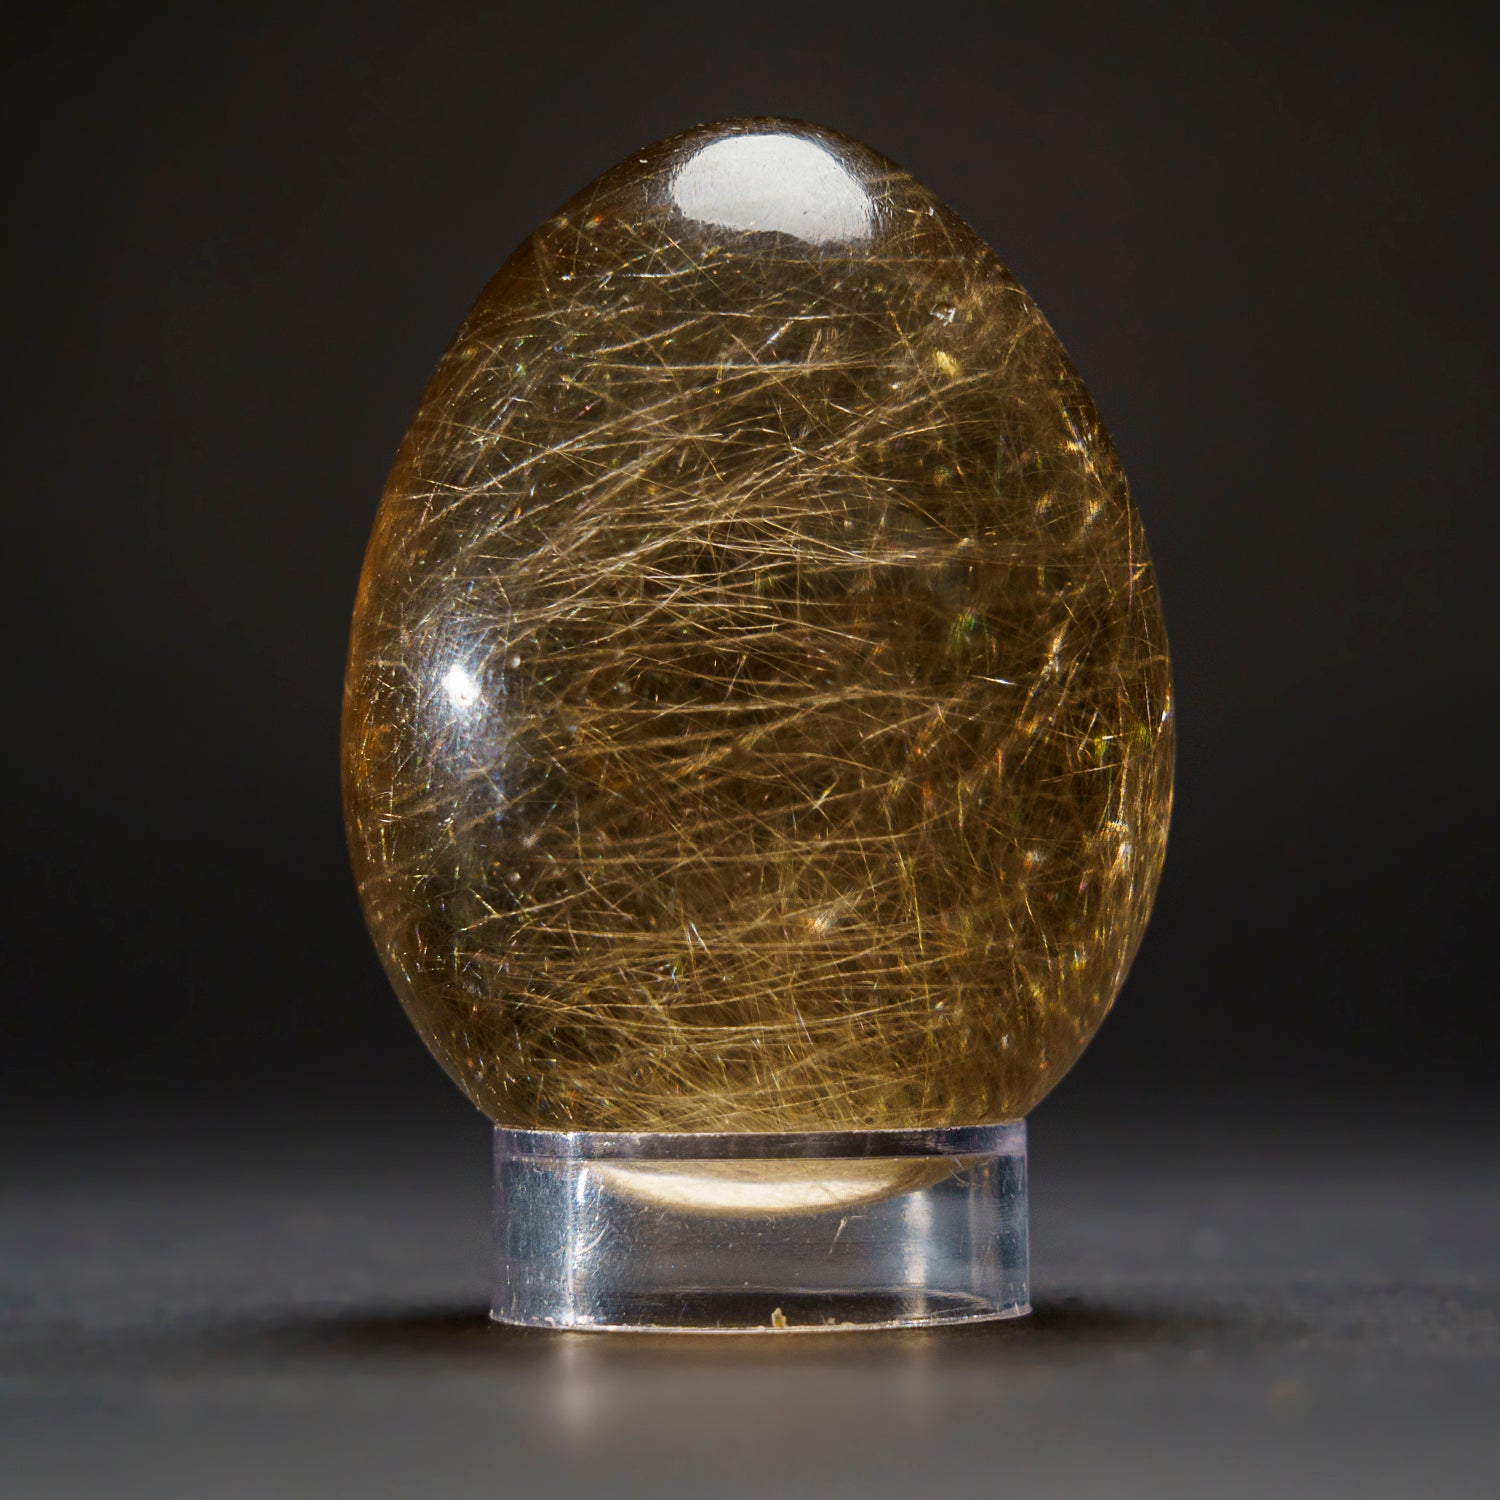 Genuine Polished Rutile Smoky Quartz Egg from Brazil (221.9 grams)